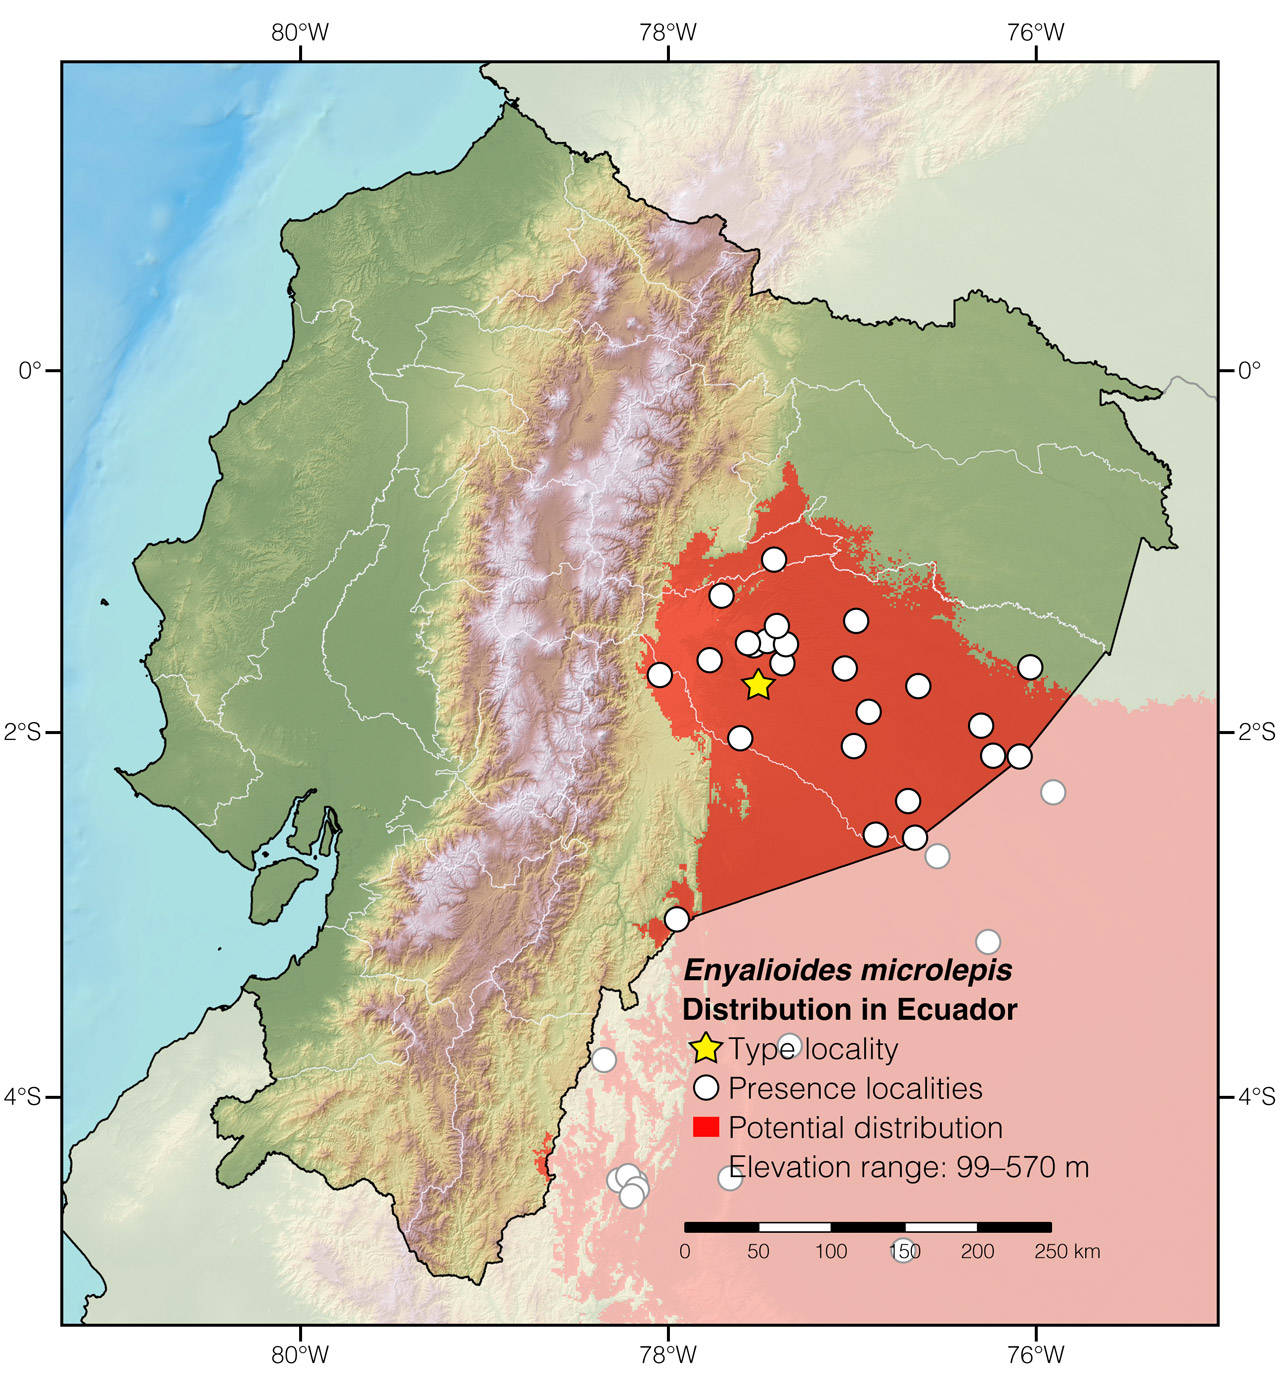 Distribution of Enyalioides microlepis in Ecuador